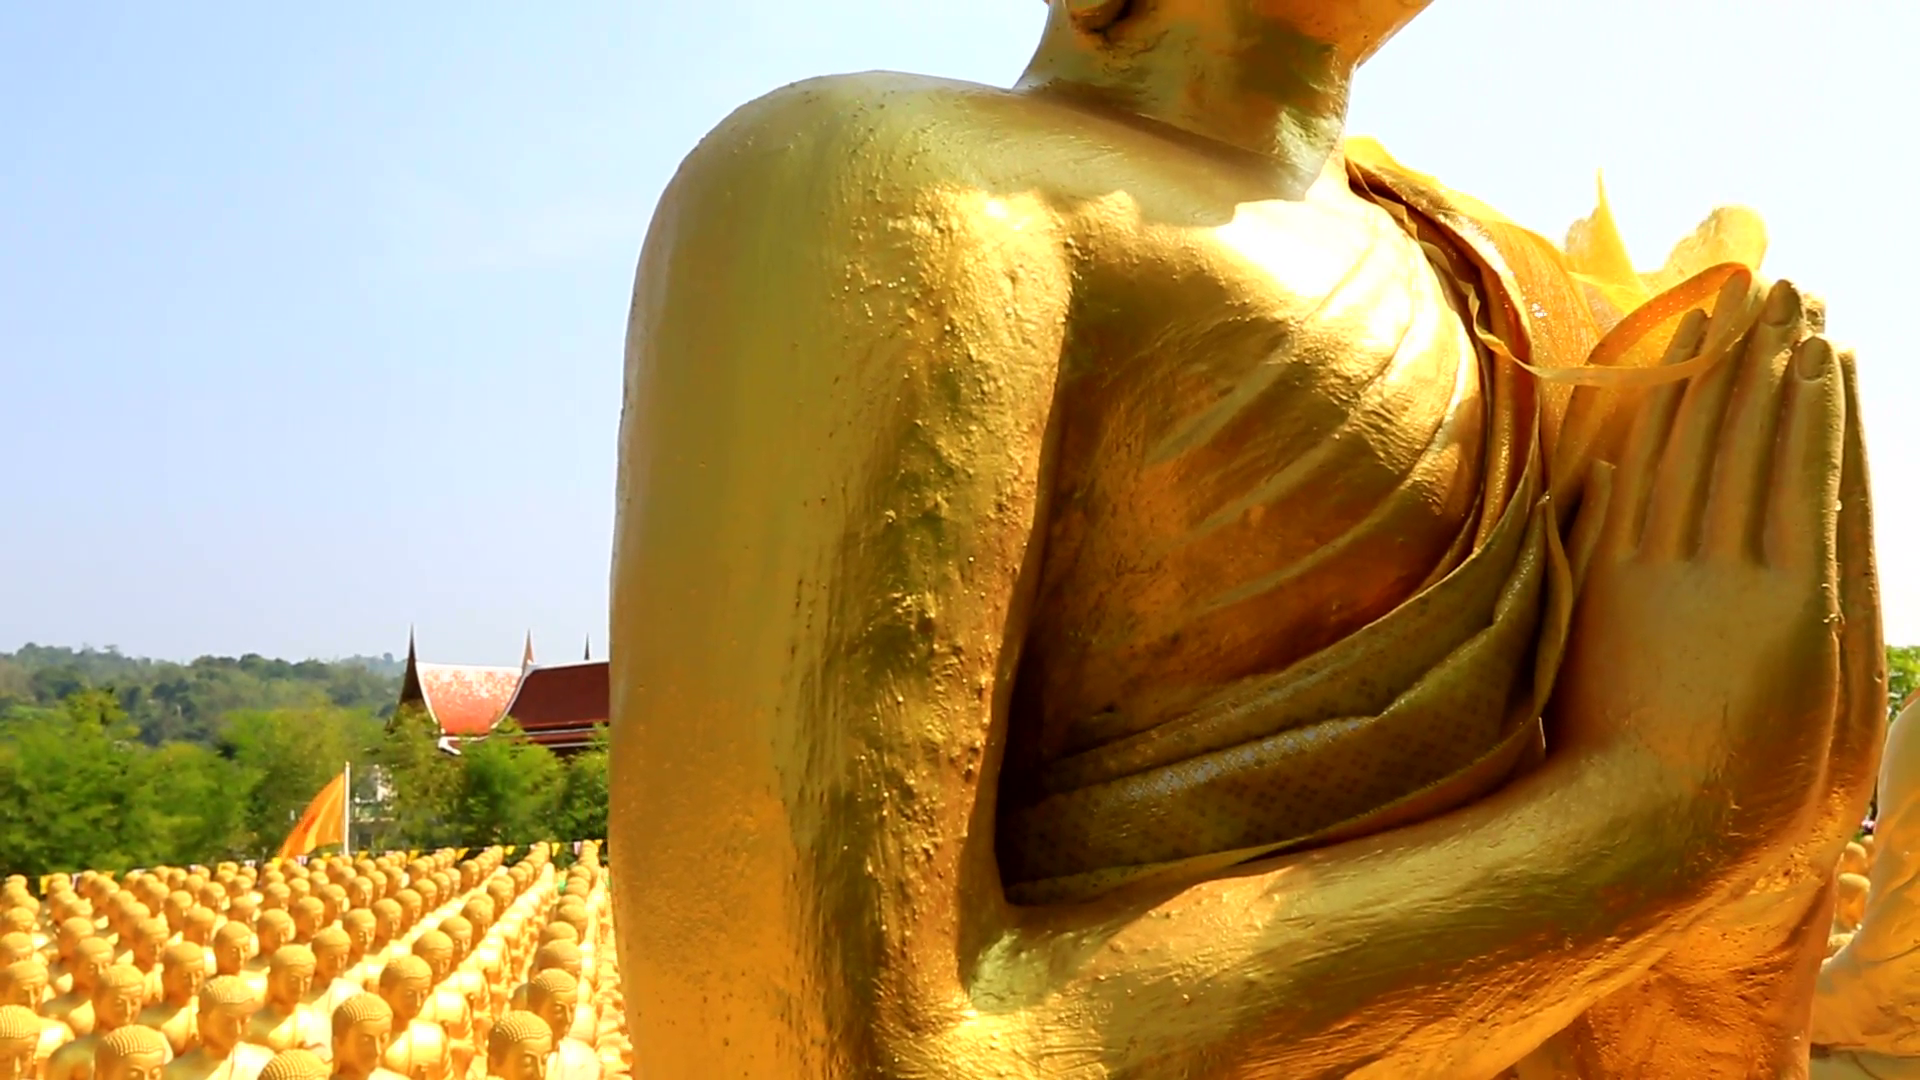 Download Free photo: Golden Buddha Face - Asia, Peace, Yoga - Free ...